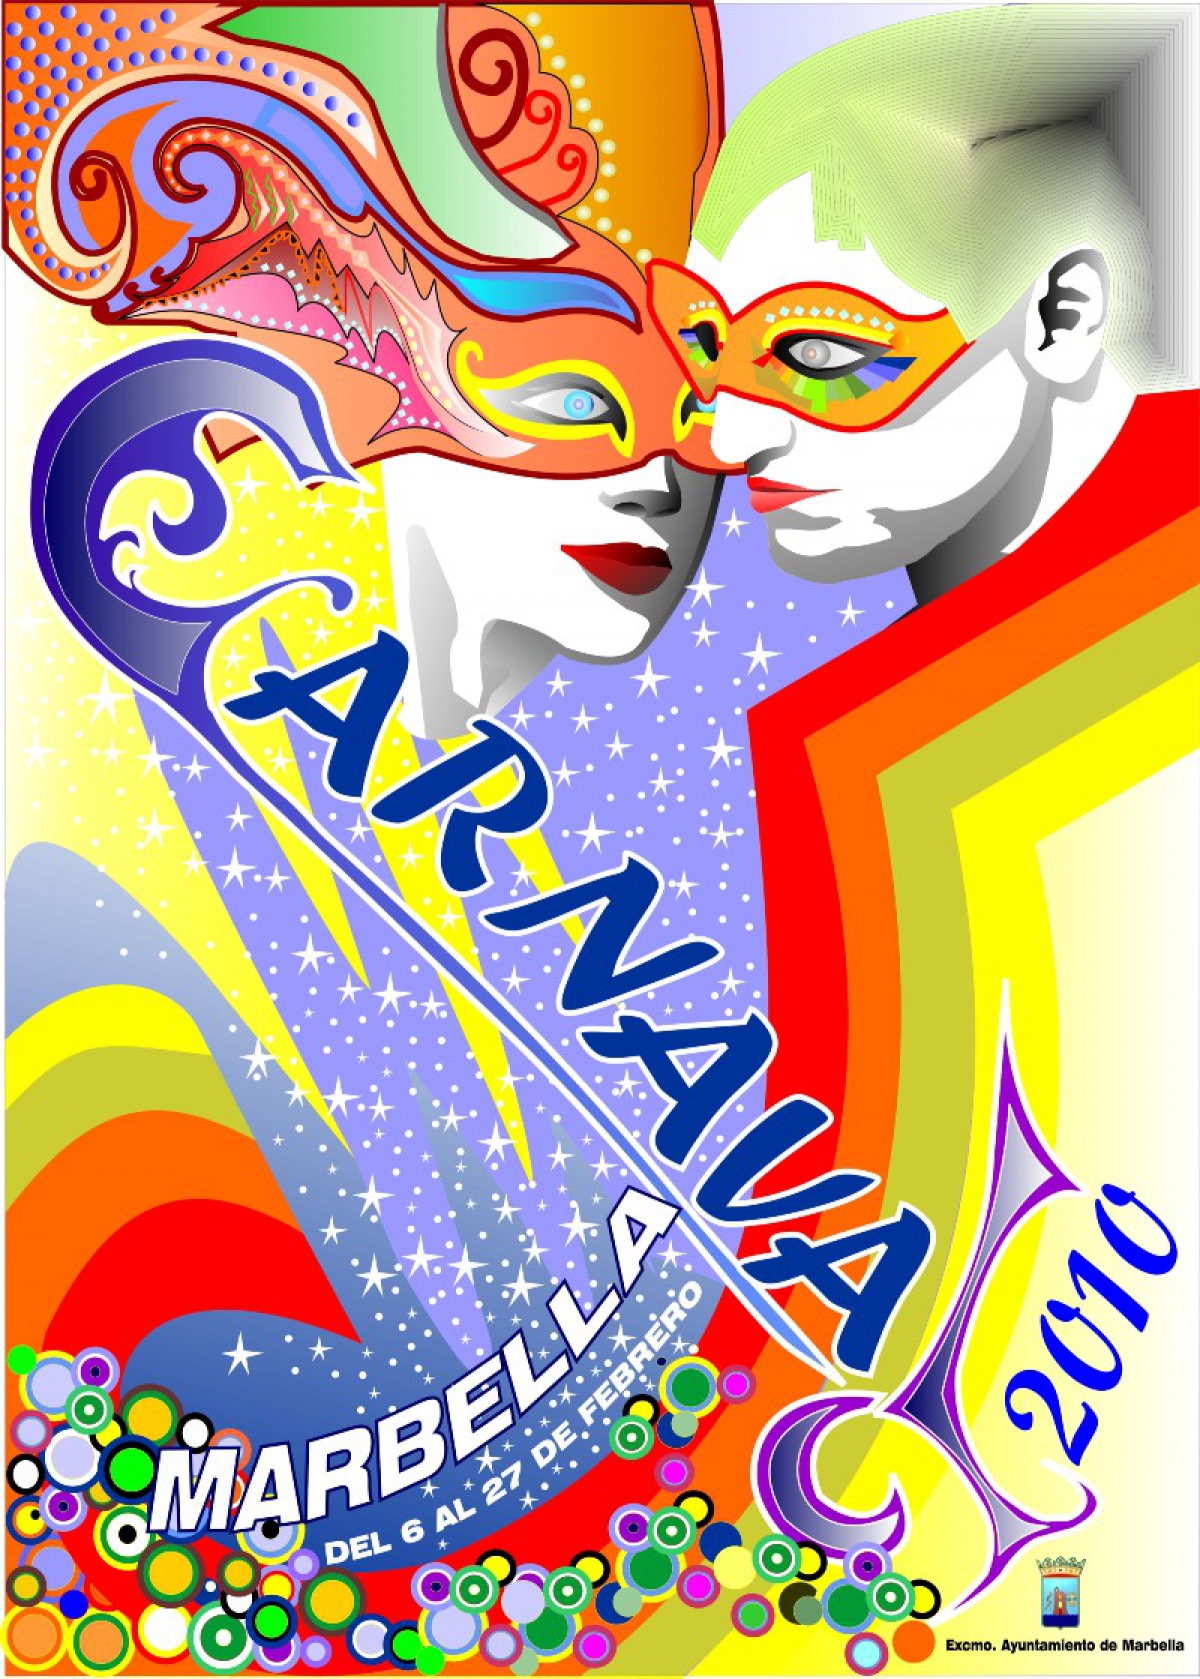 Carnaval Marbella 2010